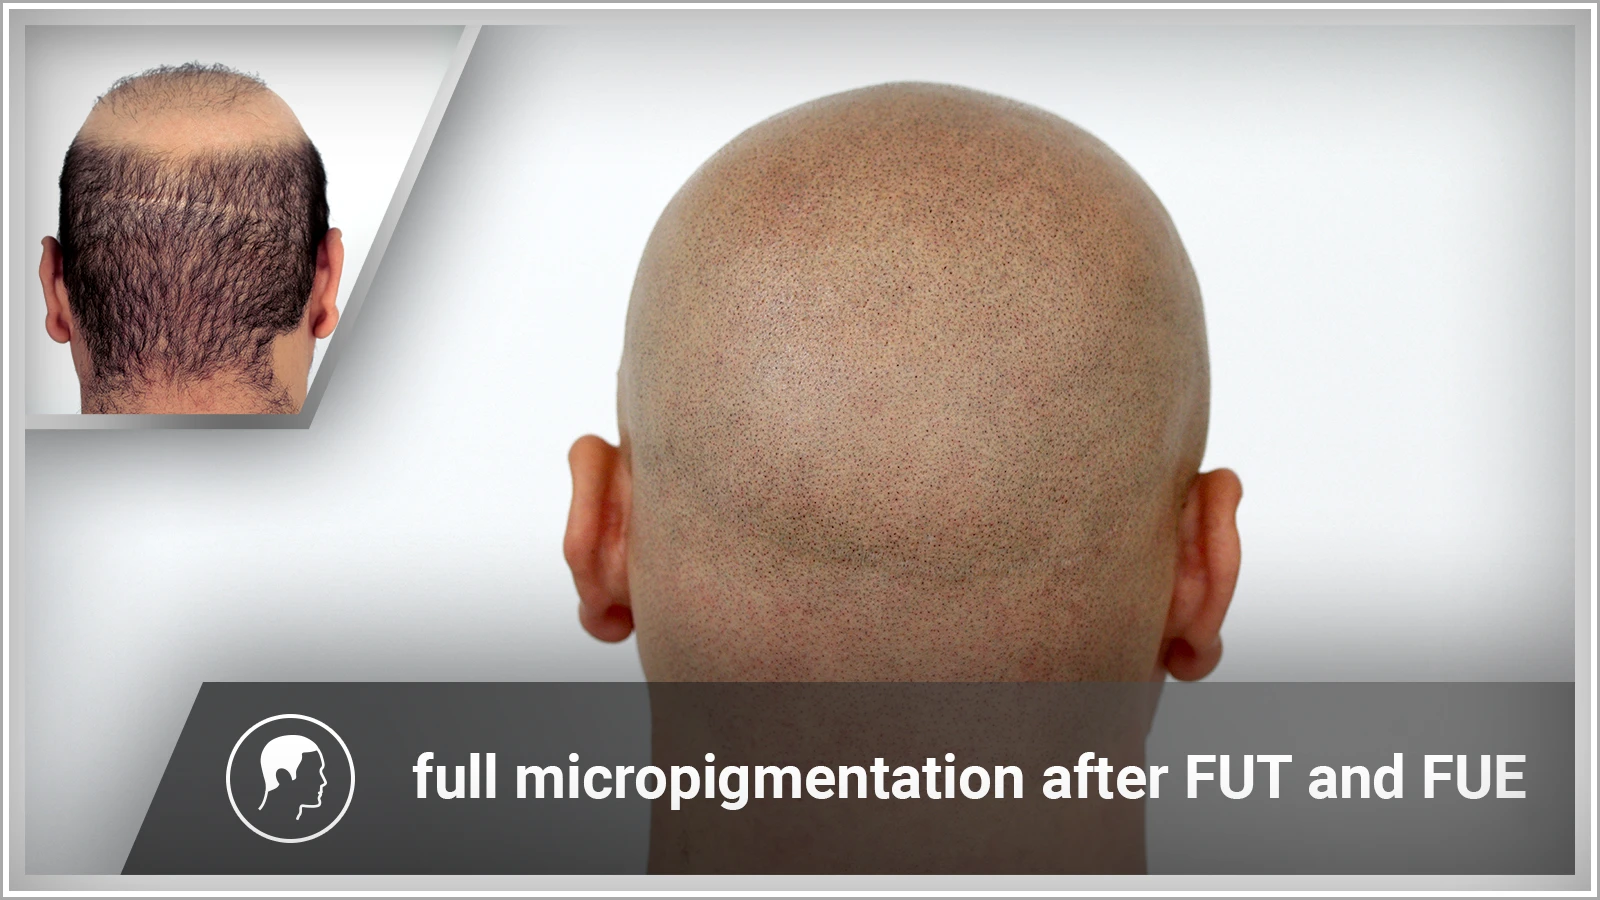 FUT hair transplant - risks and benefits